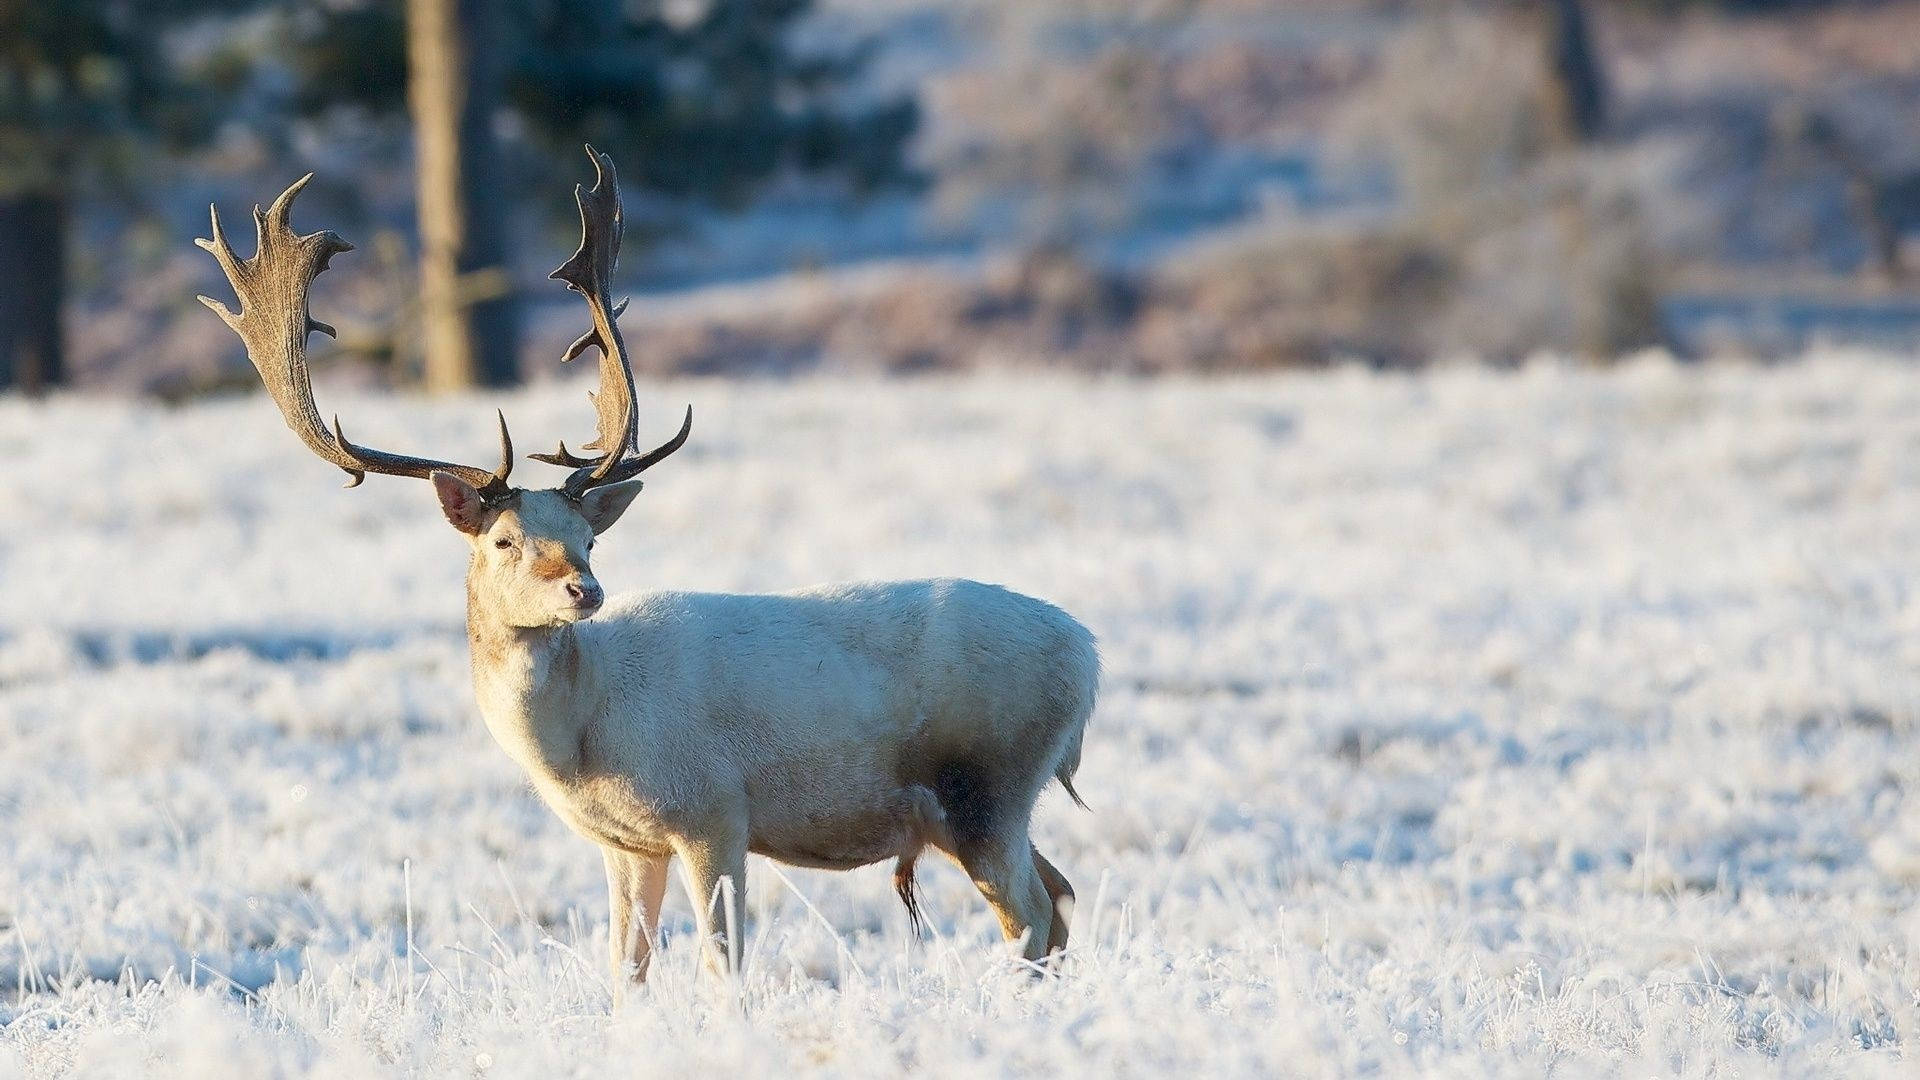 White Reindeer In The Wild Background